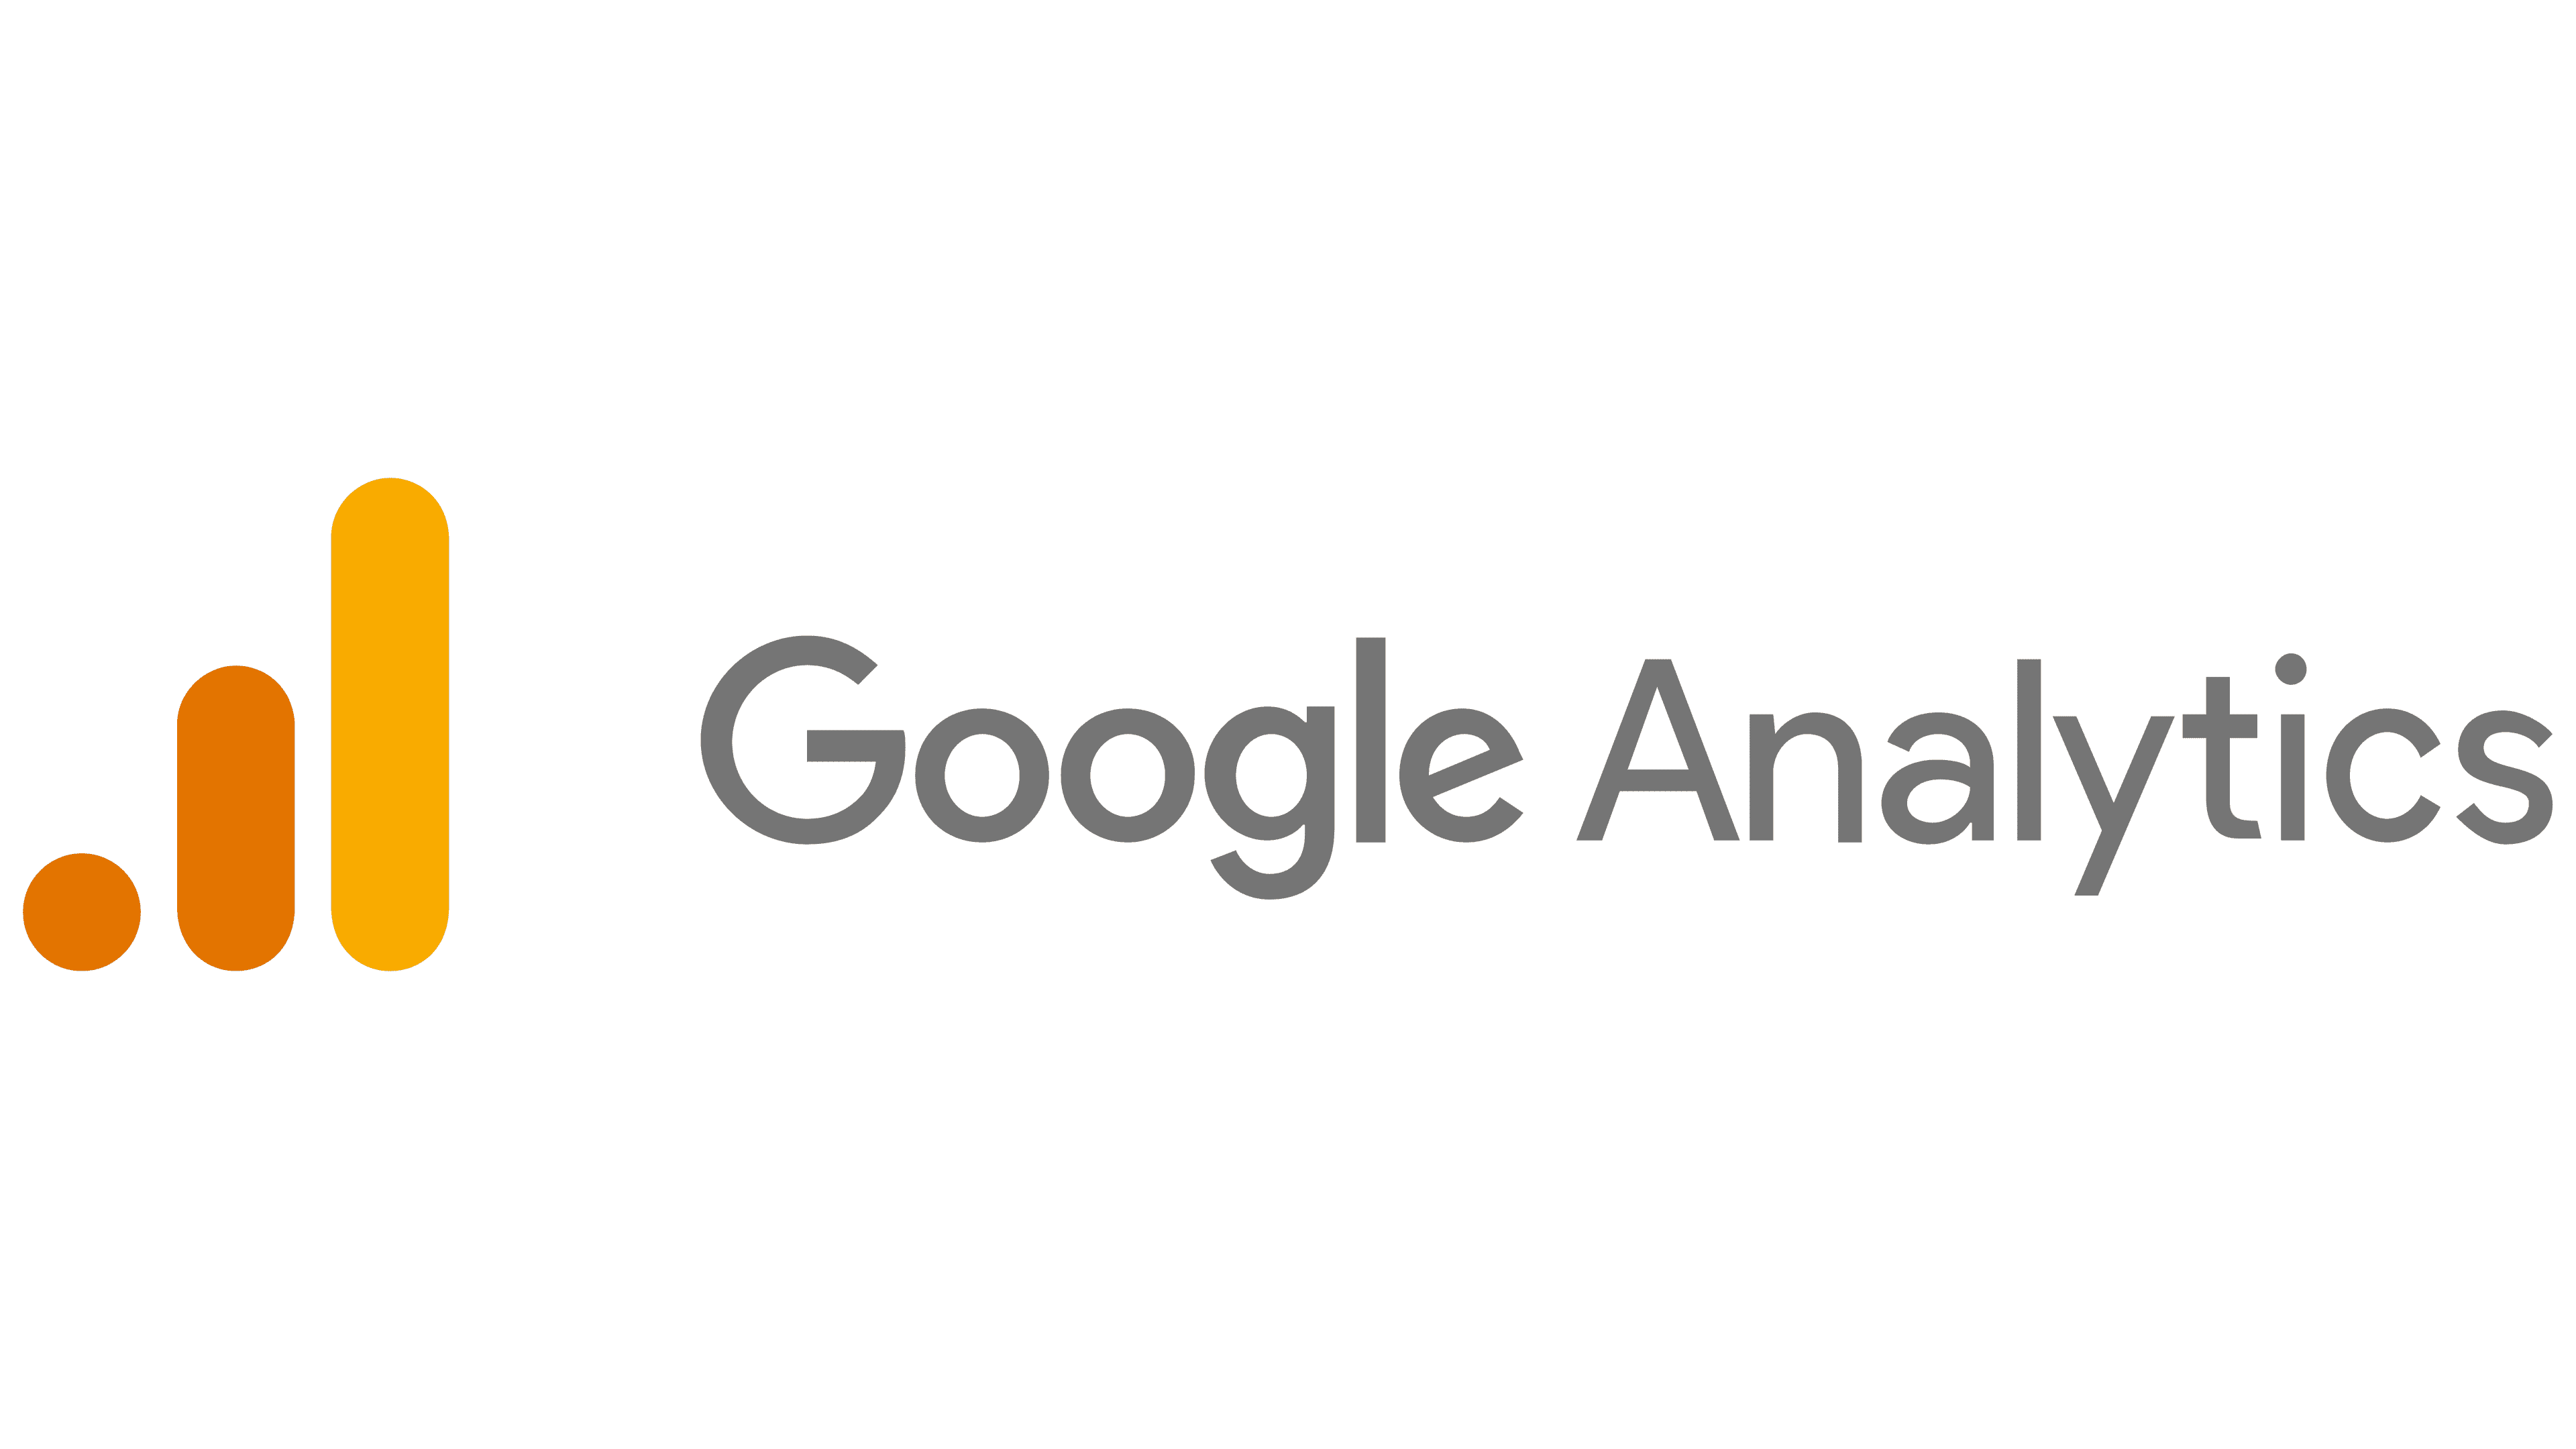 Google-Analytics-Logo-2019-present | Porter | All things Google ...